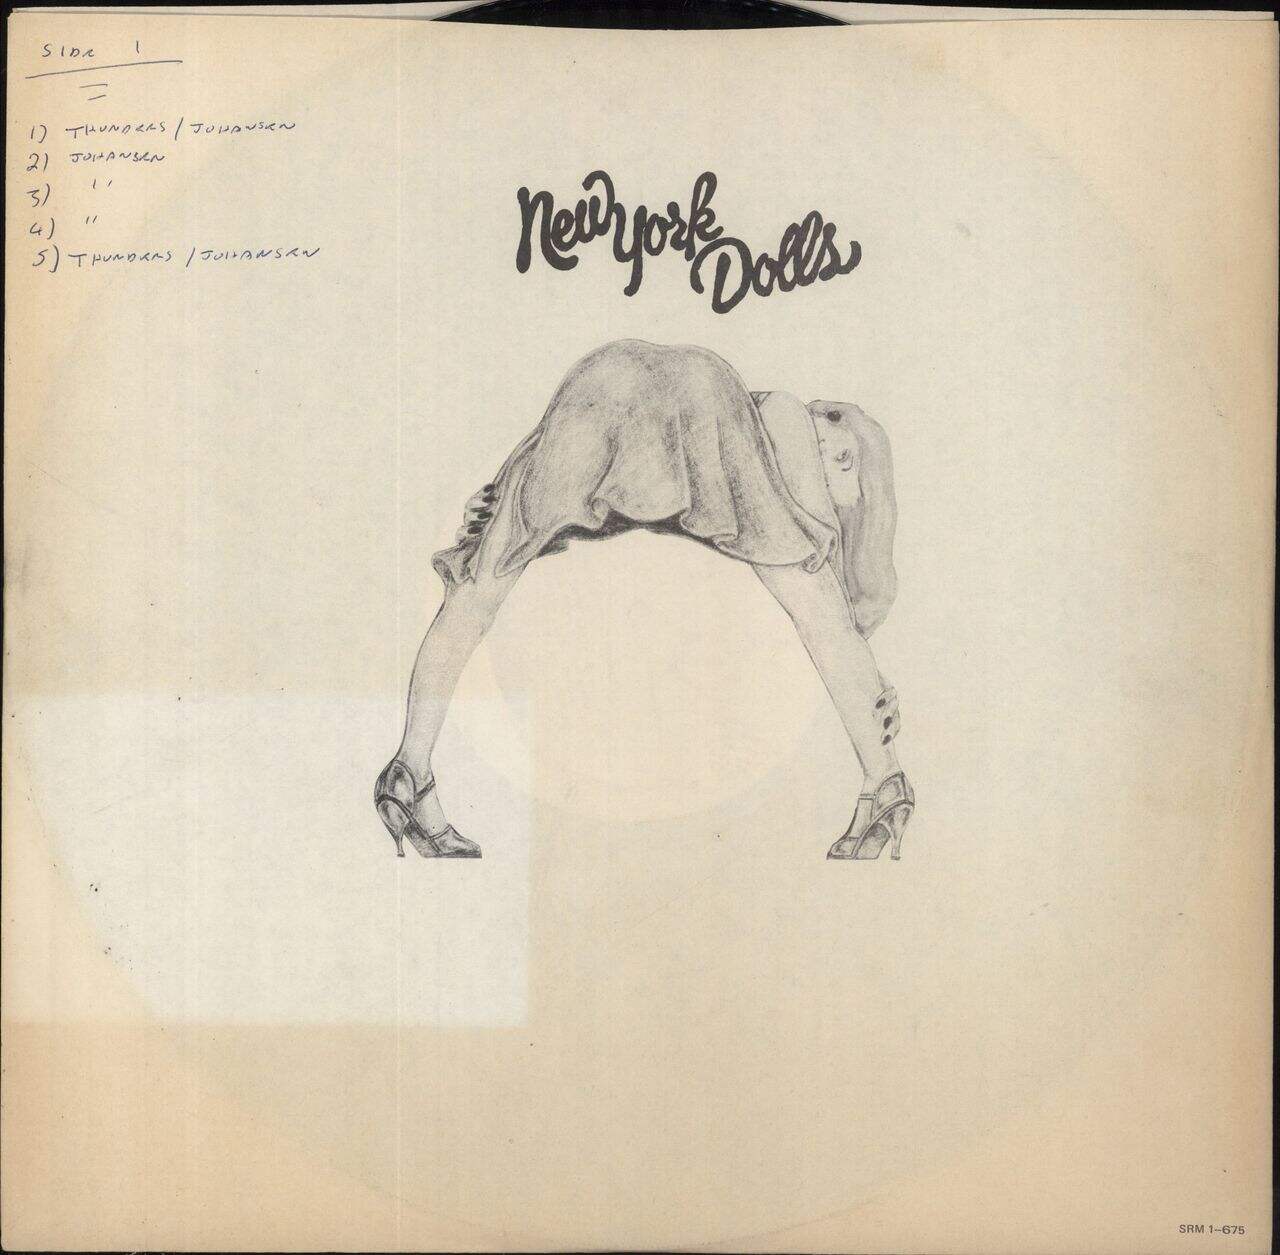 New York Dolls New York Dolls - PRC Pressing US Vinyl LP